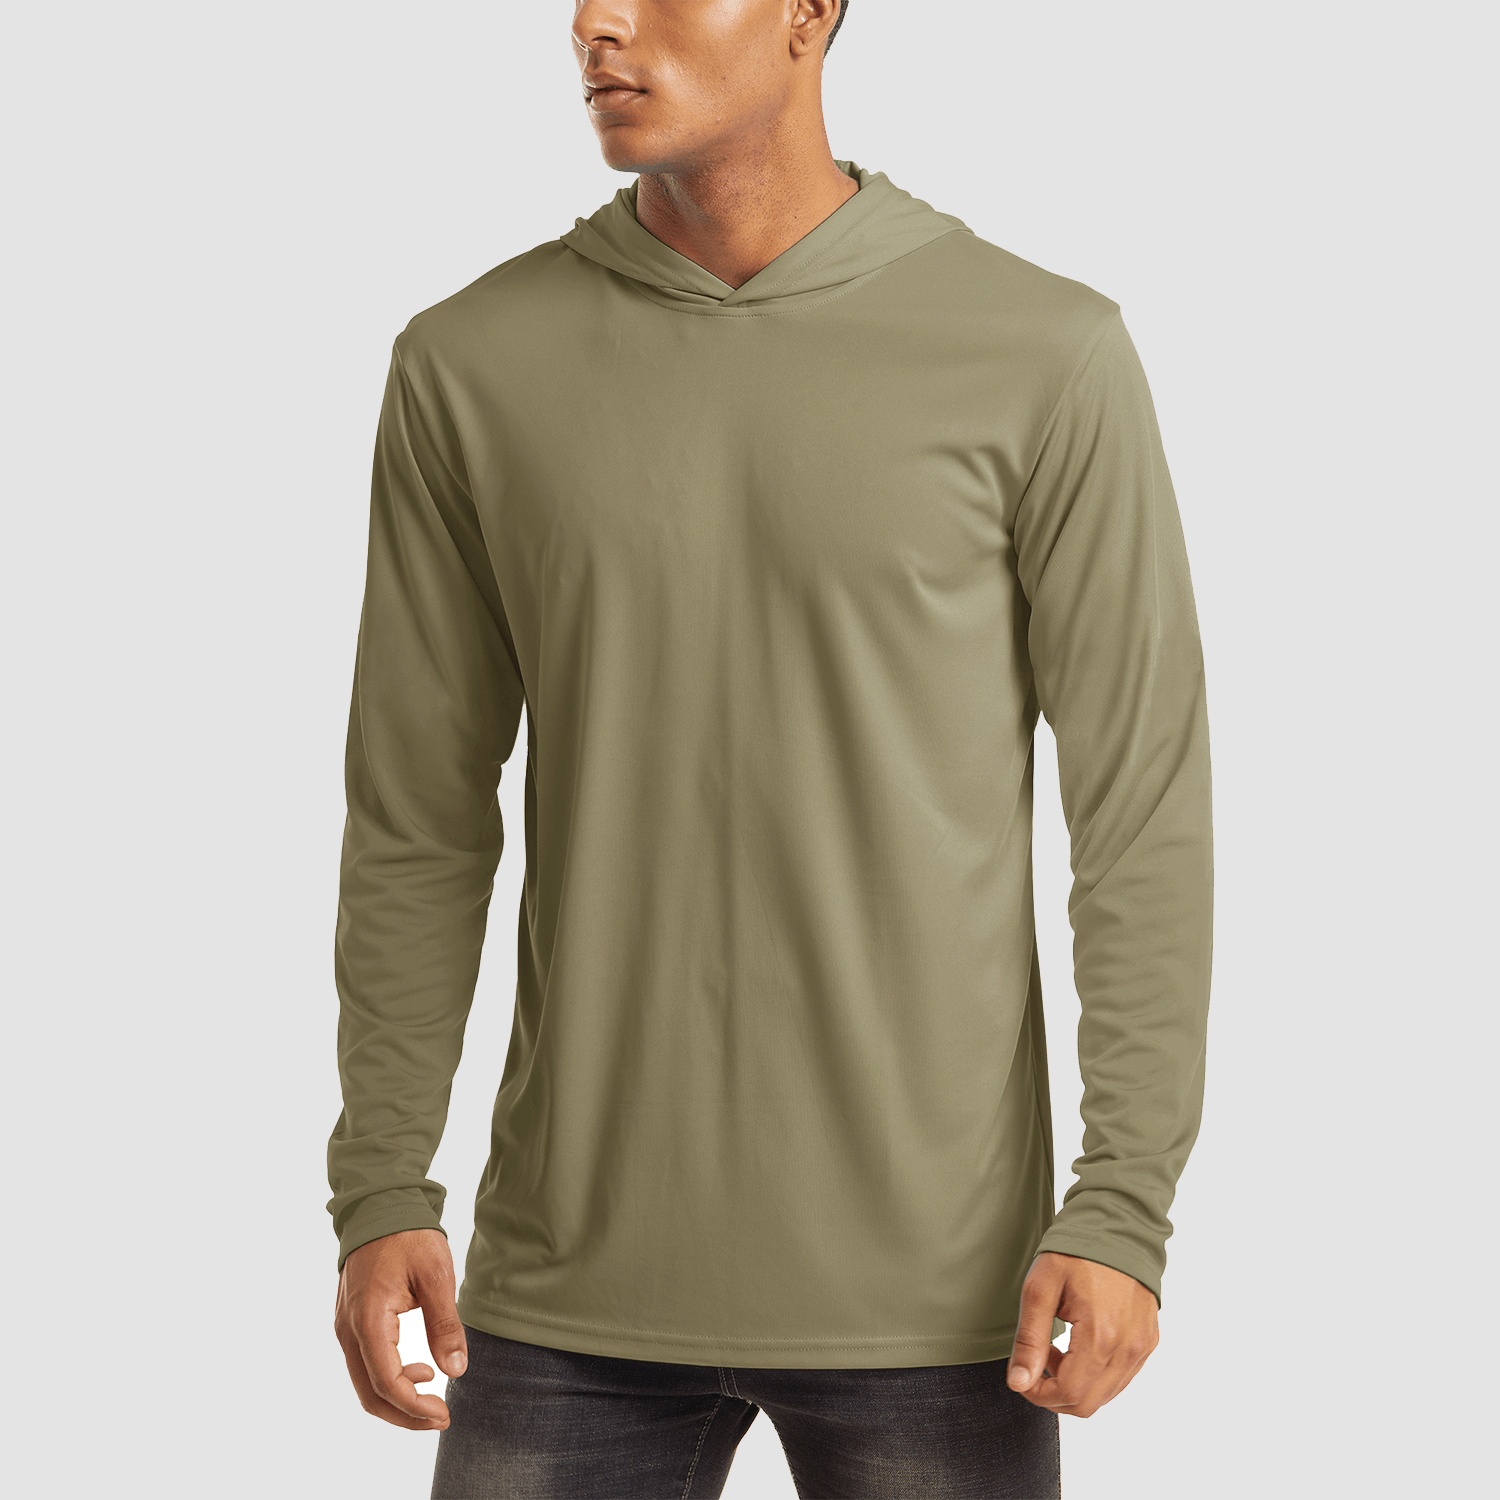 【Buy 4 Get 4th Free】Men's Long Sleeve Hooded Shirt UPF 50+ Athletic Shirts, Grey / XS